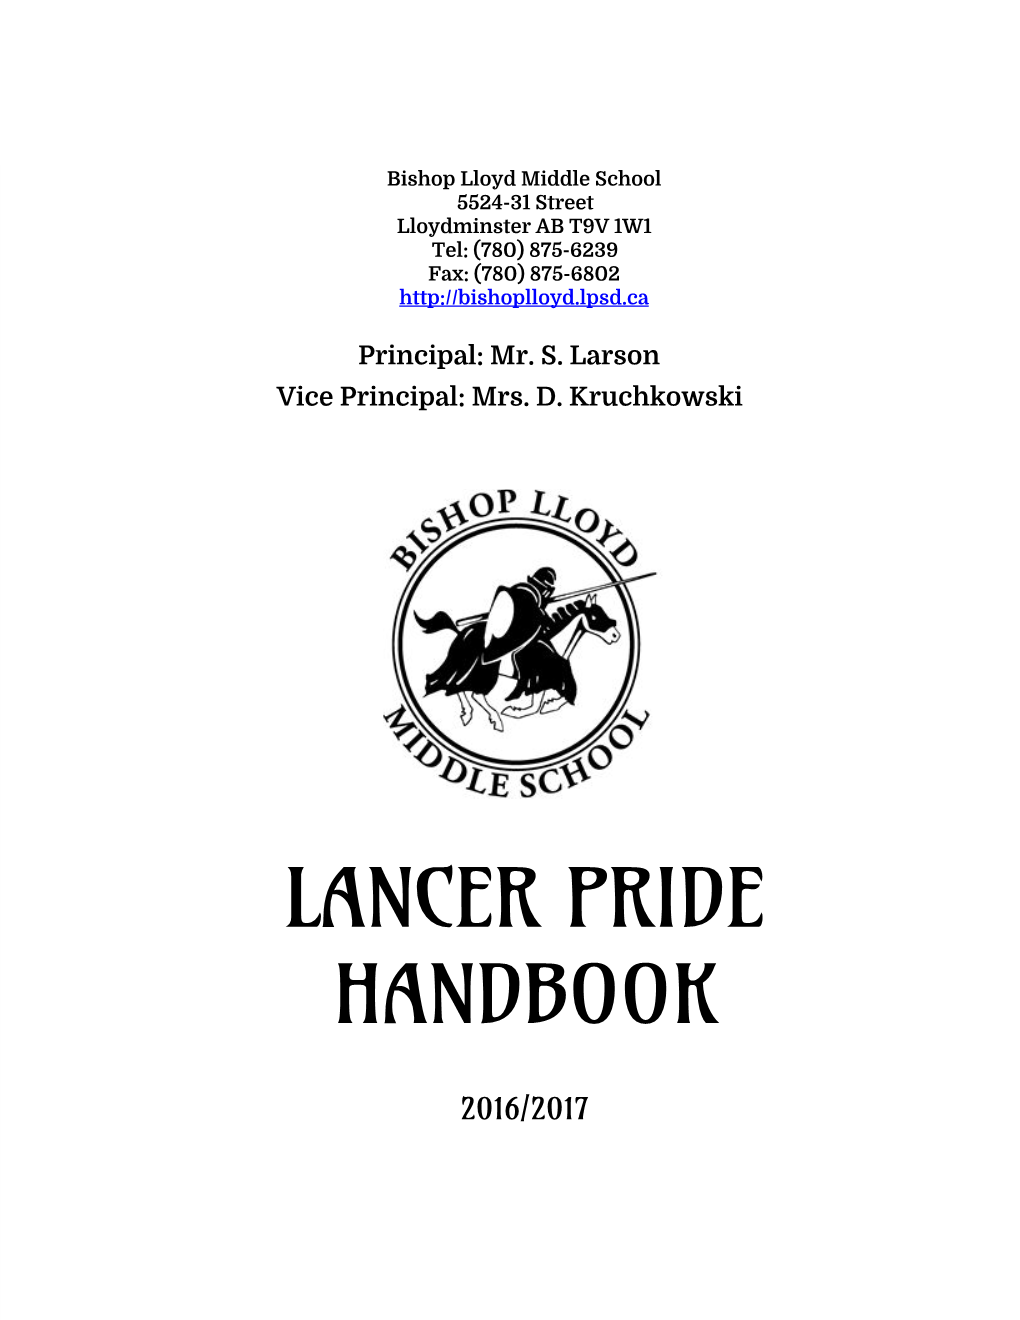 Lancer Pride Handbook